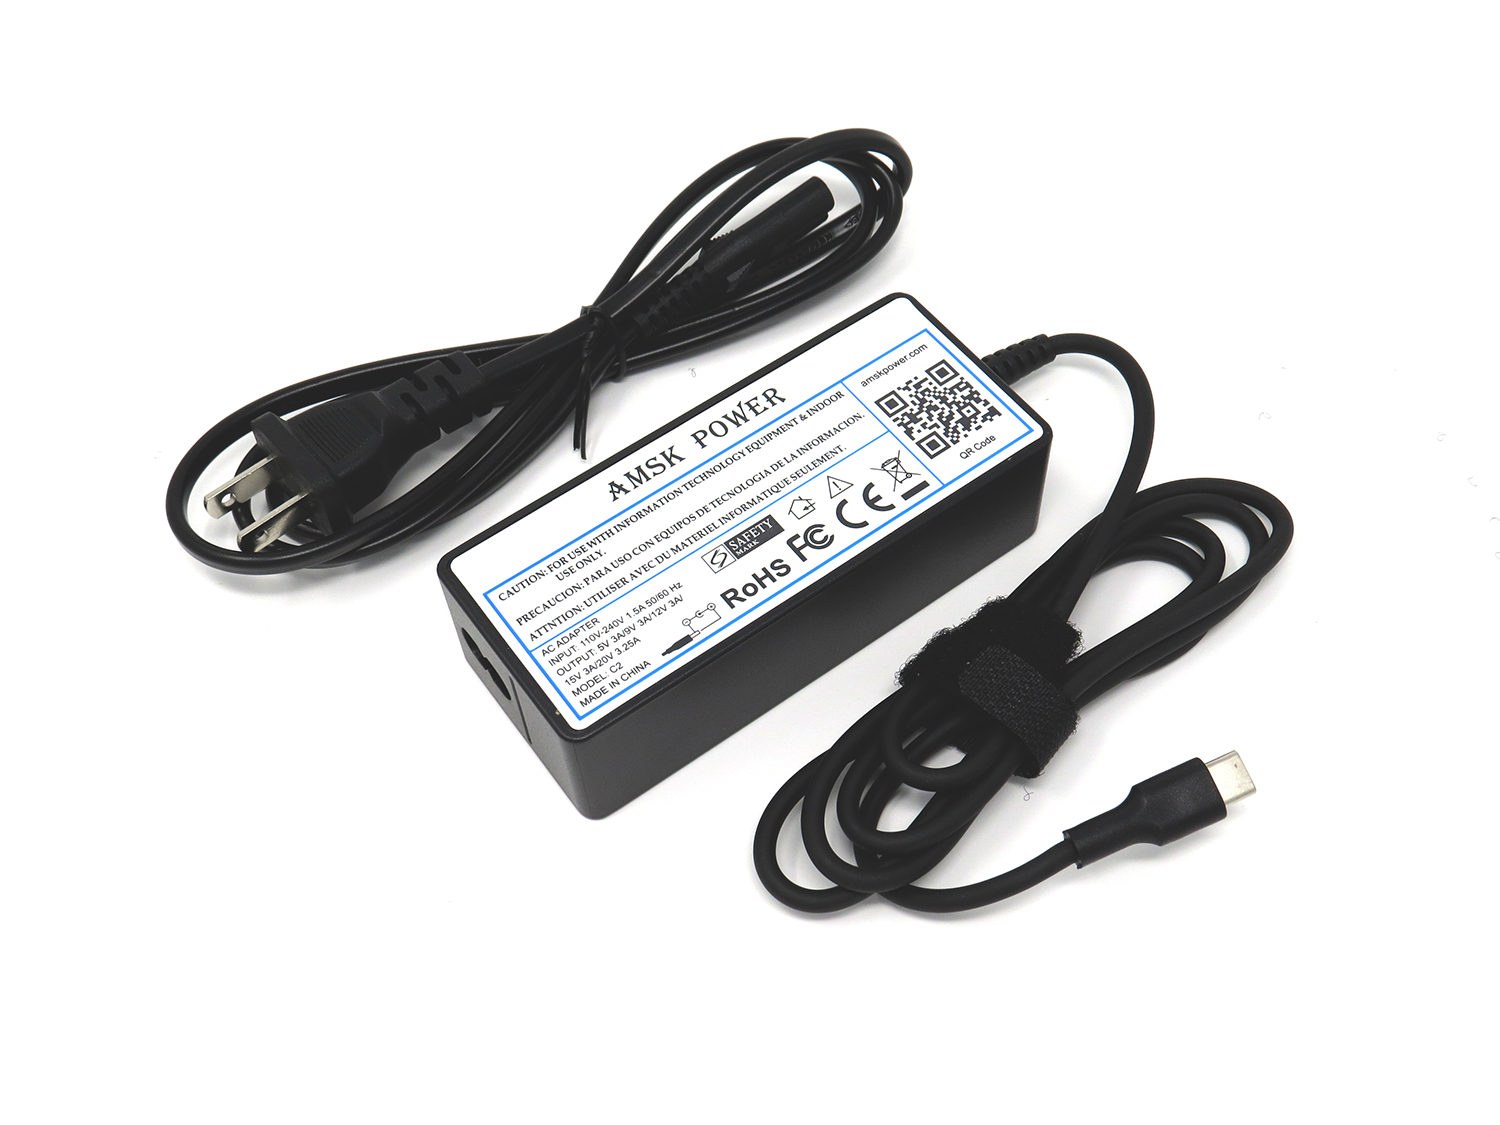 AMSK POWER Ac Adapter USB-C 65W for Asus Zenbook 3 UX390 UX390U UX390UA UX490 UX490U - image 1 of 1